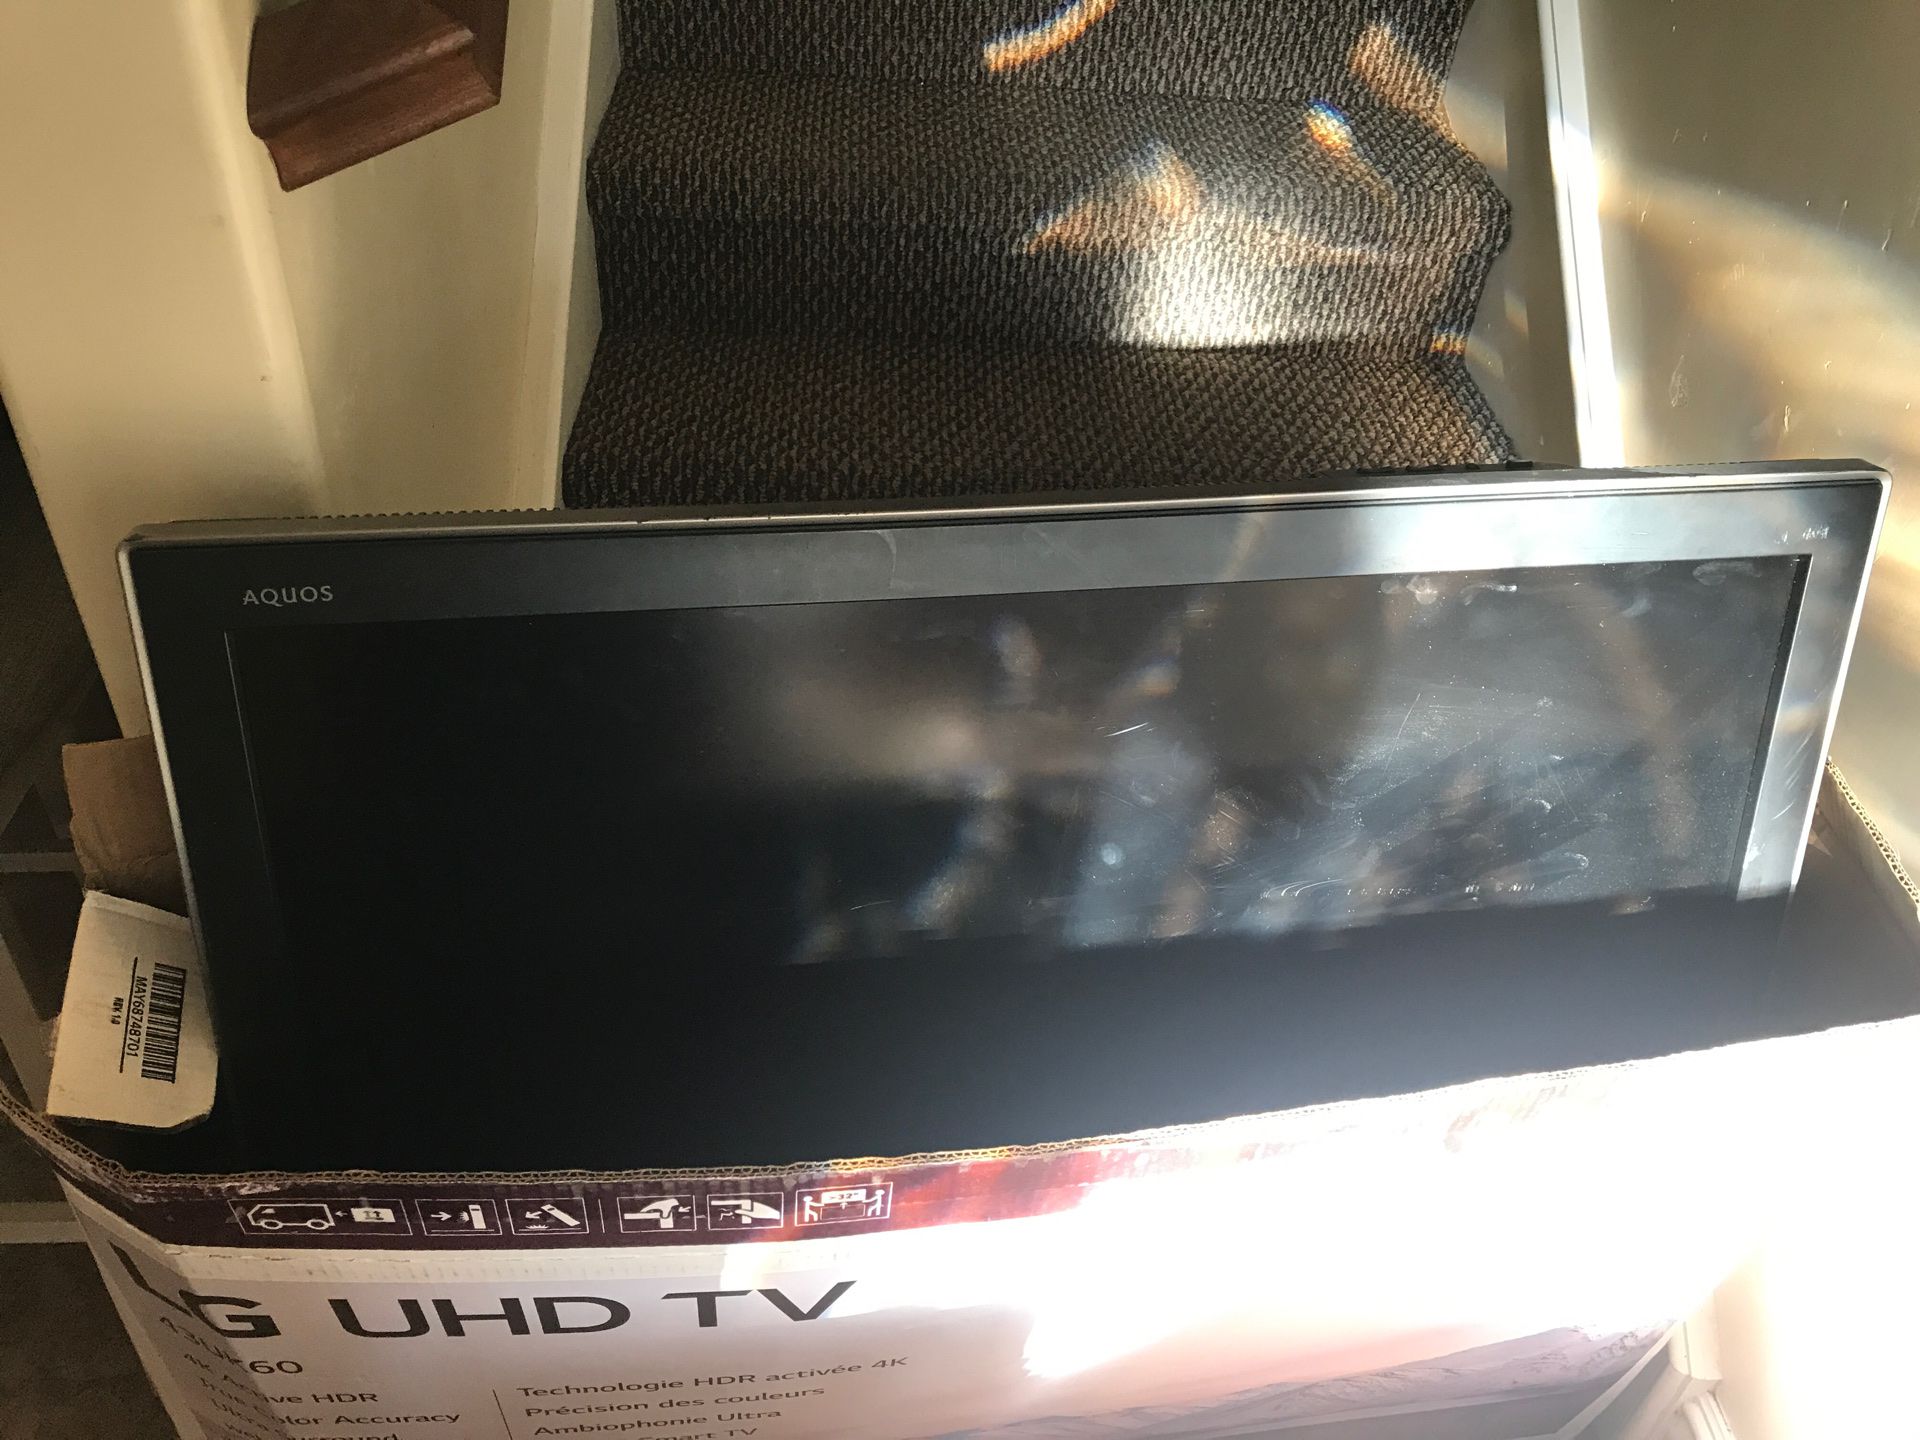 AQUOS 40 inch monitor/TV